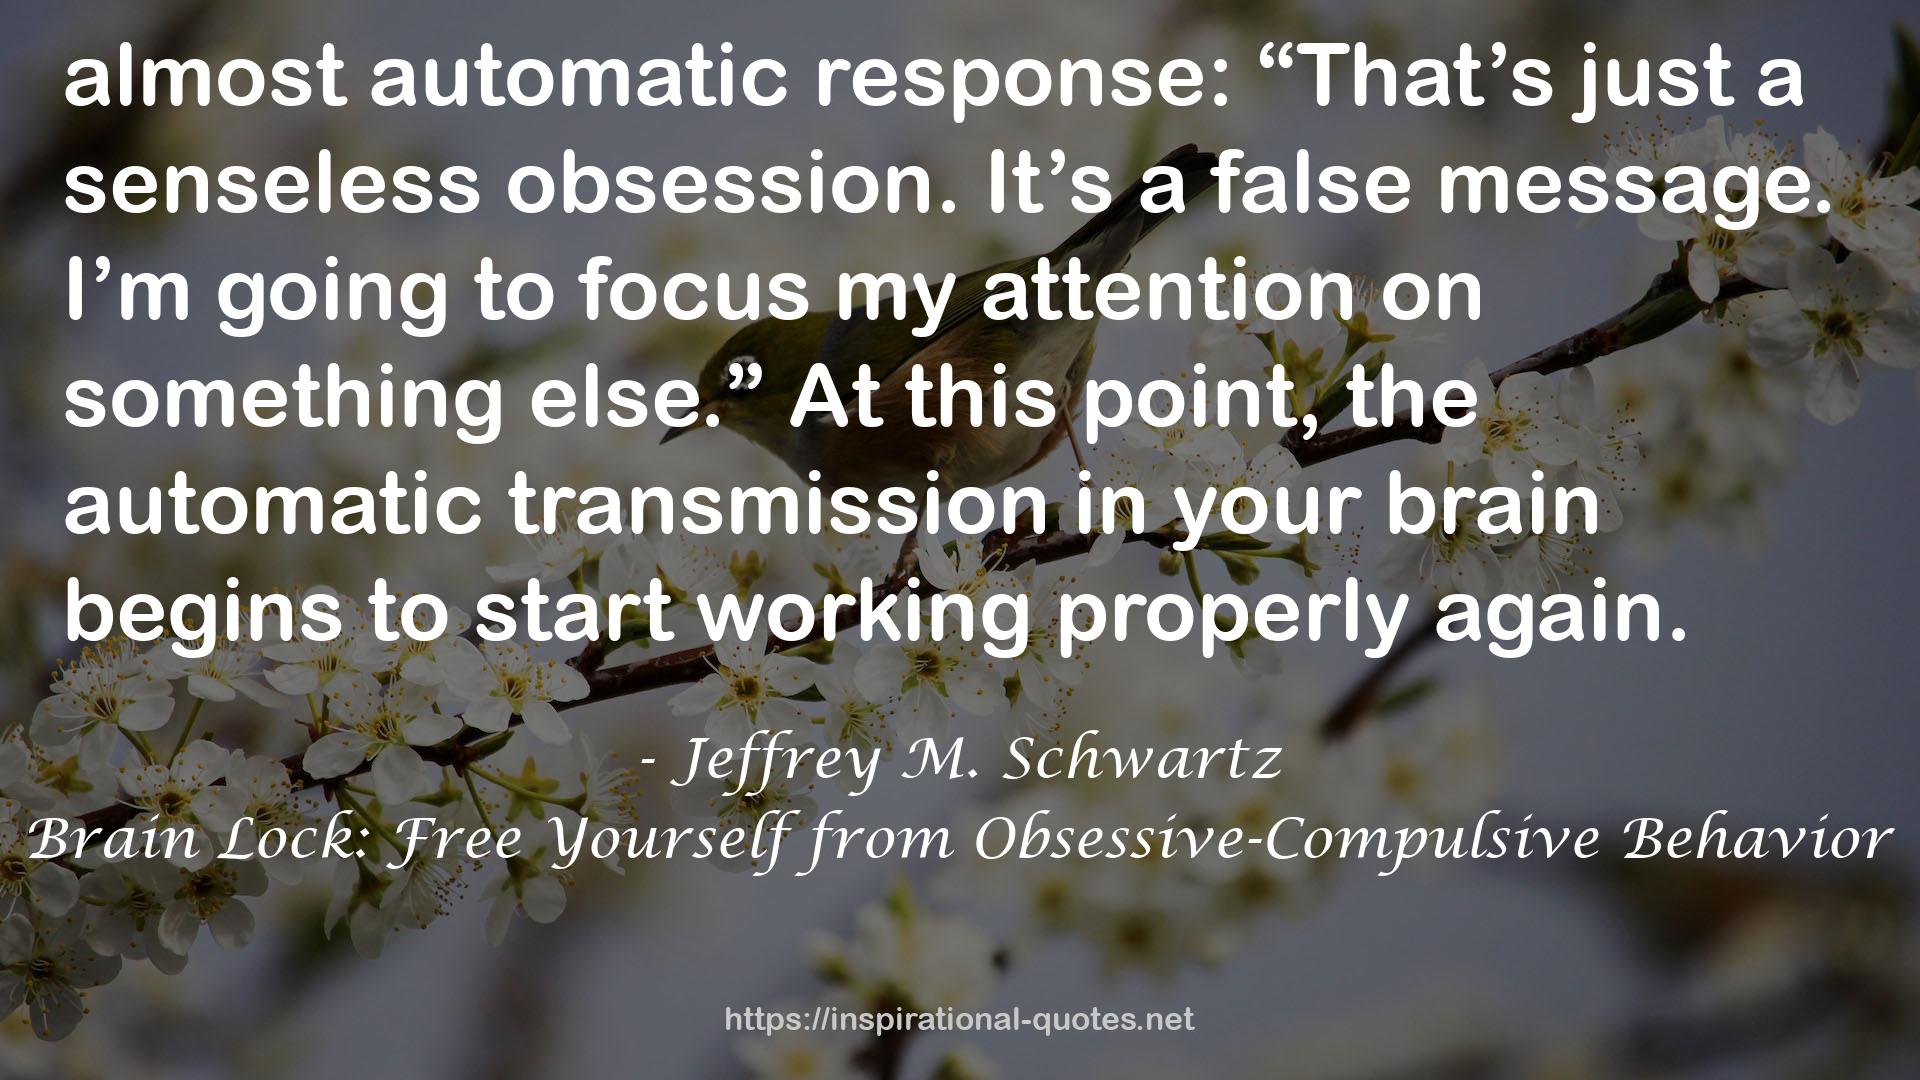 Brain Lock: Free Yourself from Obsessive-Compulsive Behavior QUOTES